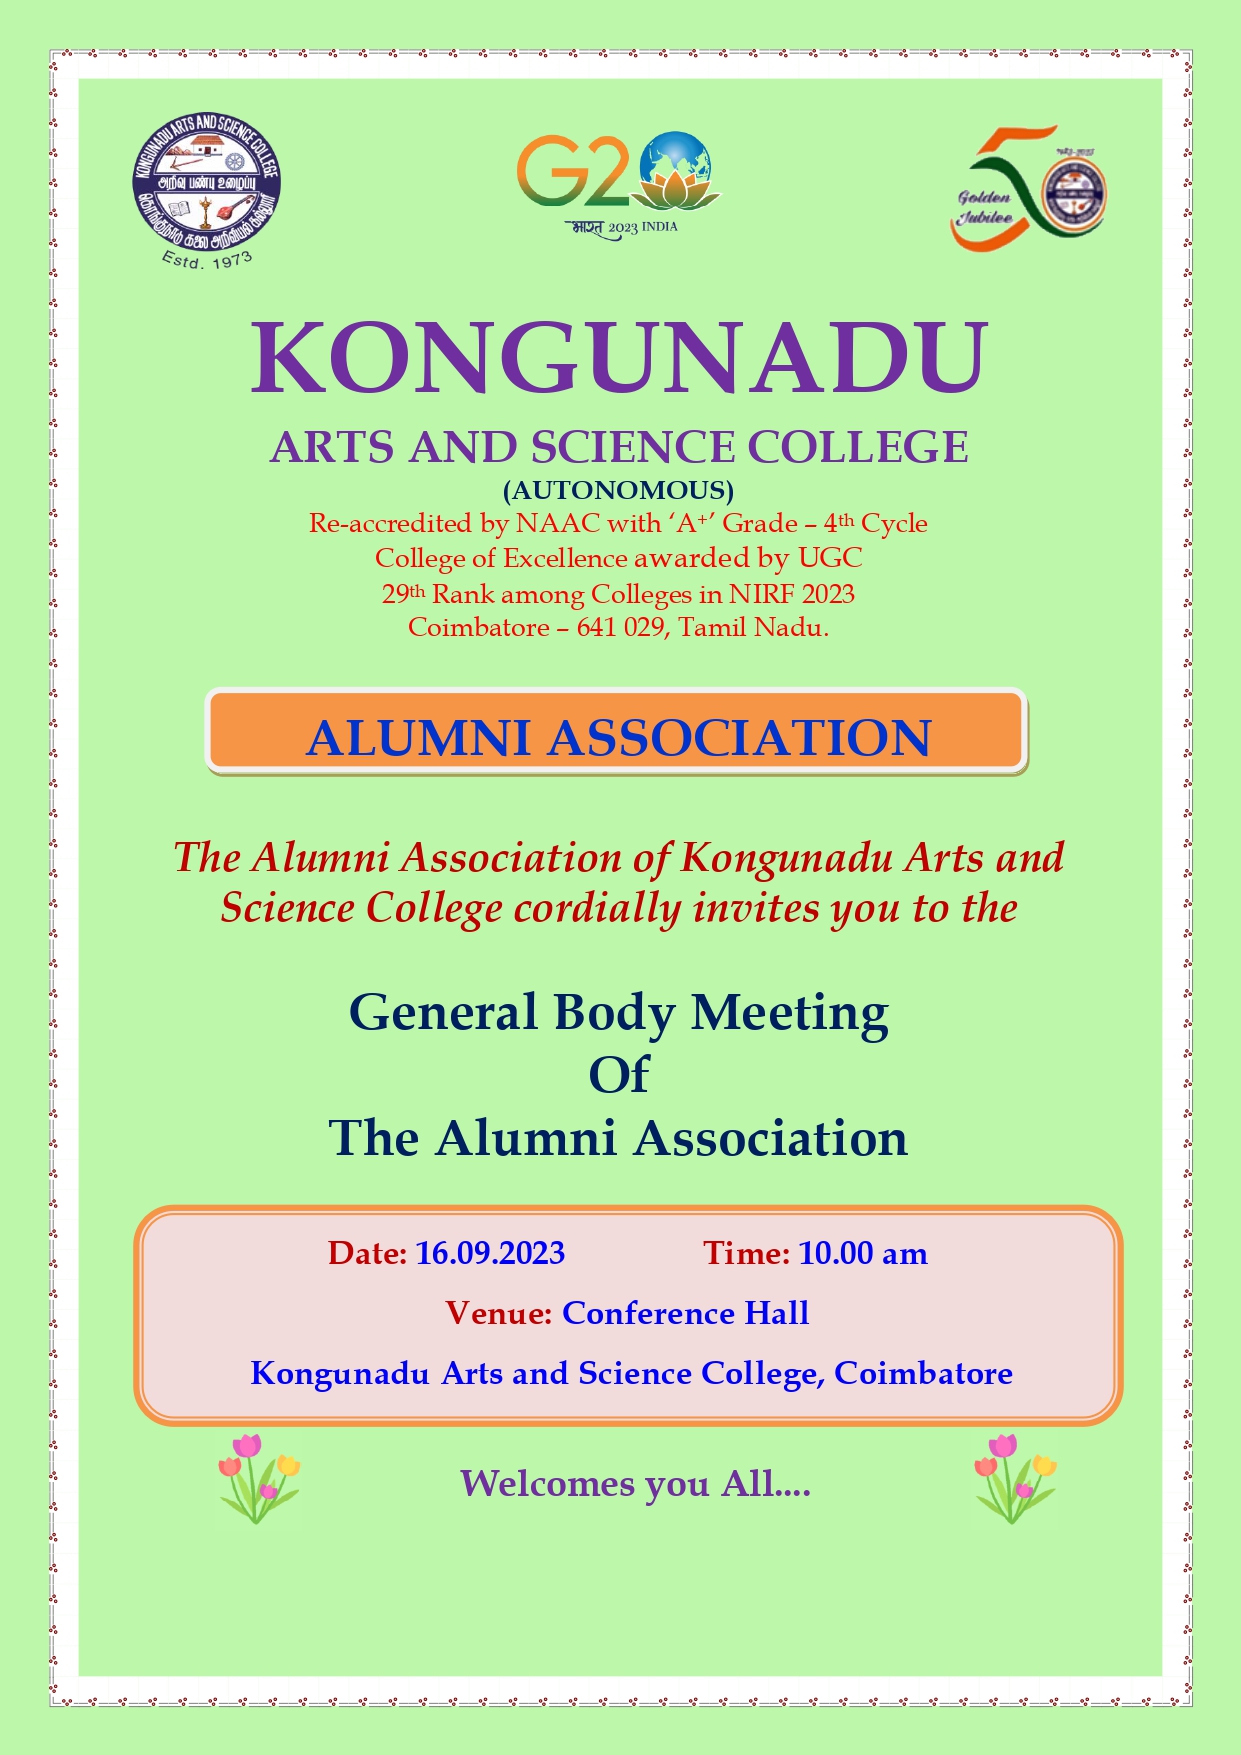 General Body Meeting - Alumni Association